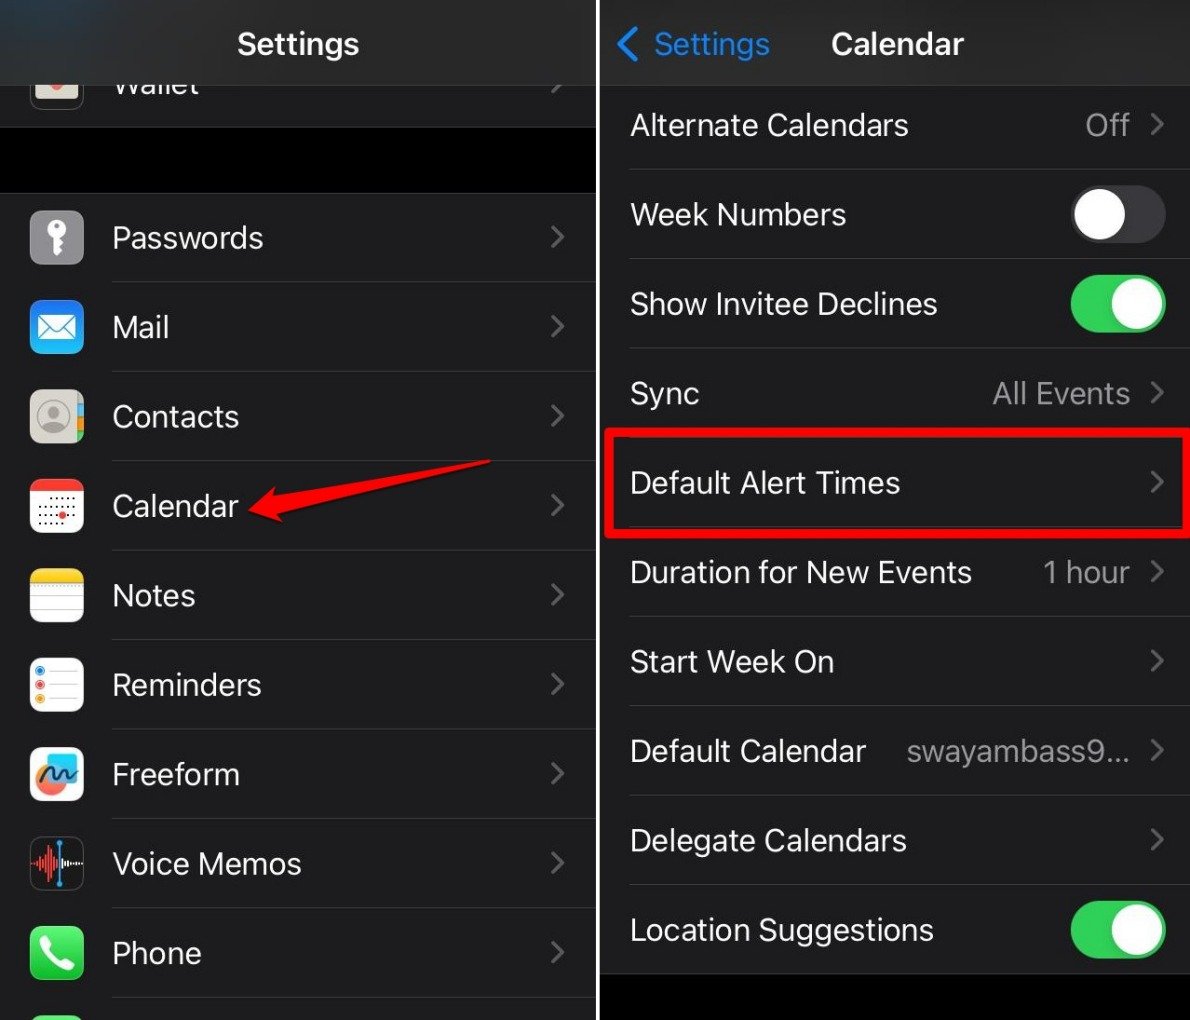 iOS calendar default alert times